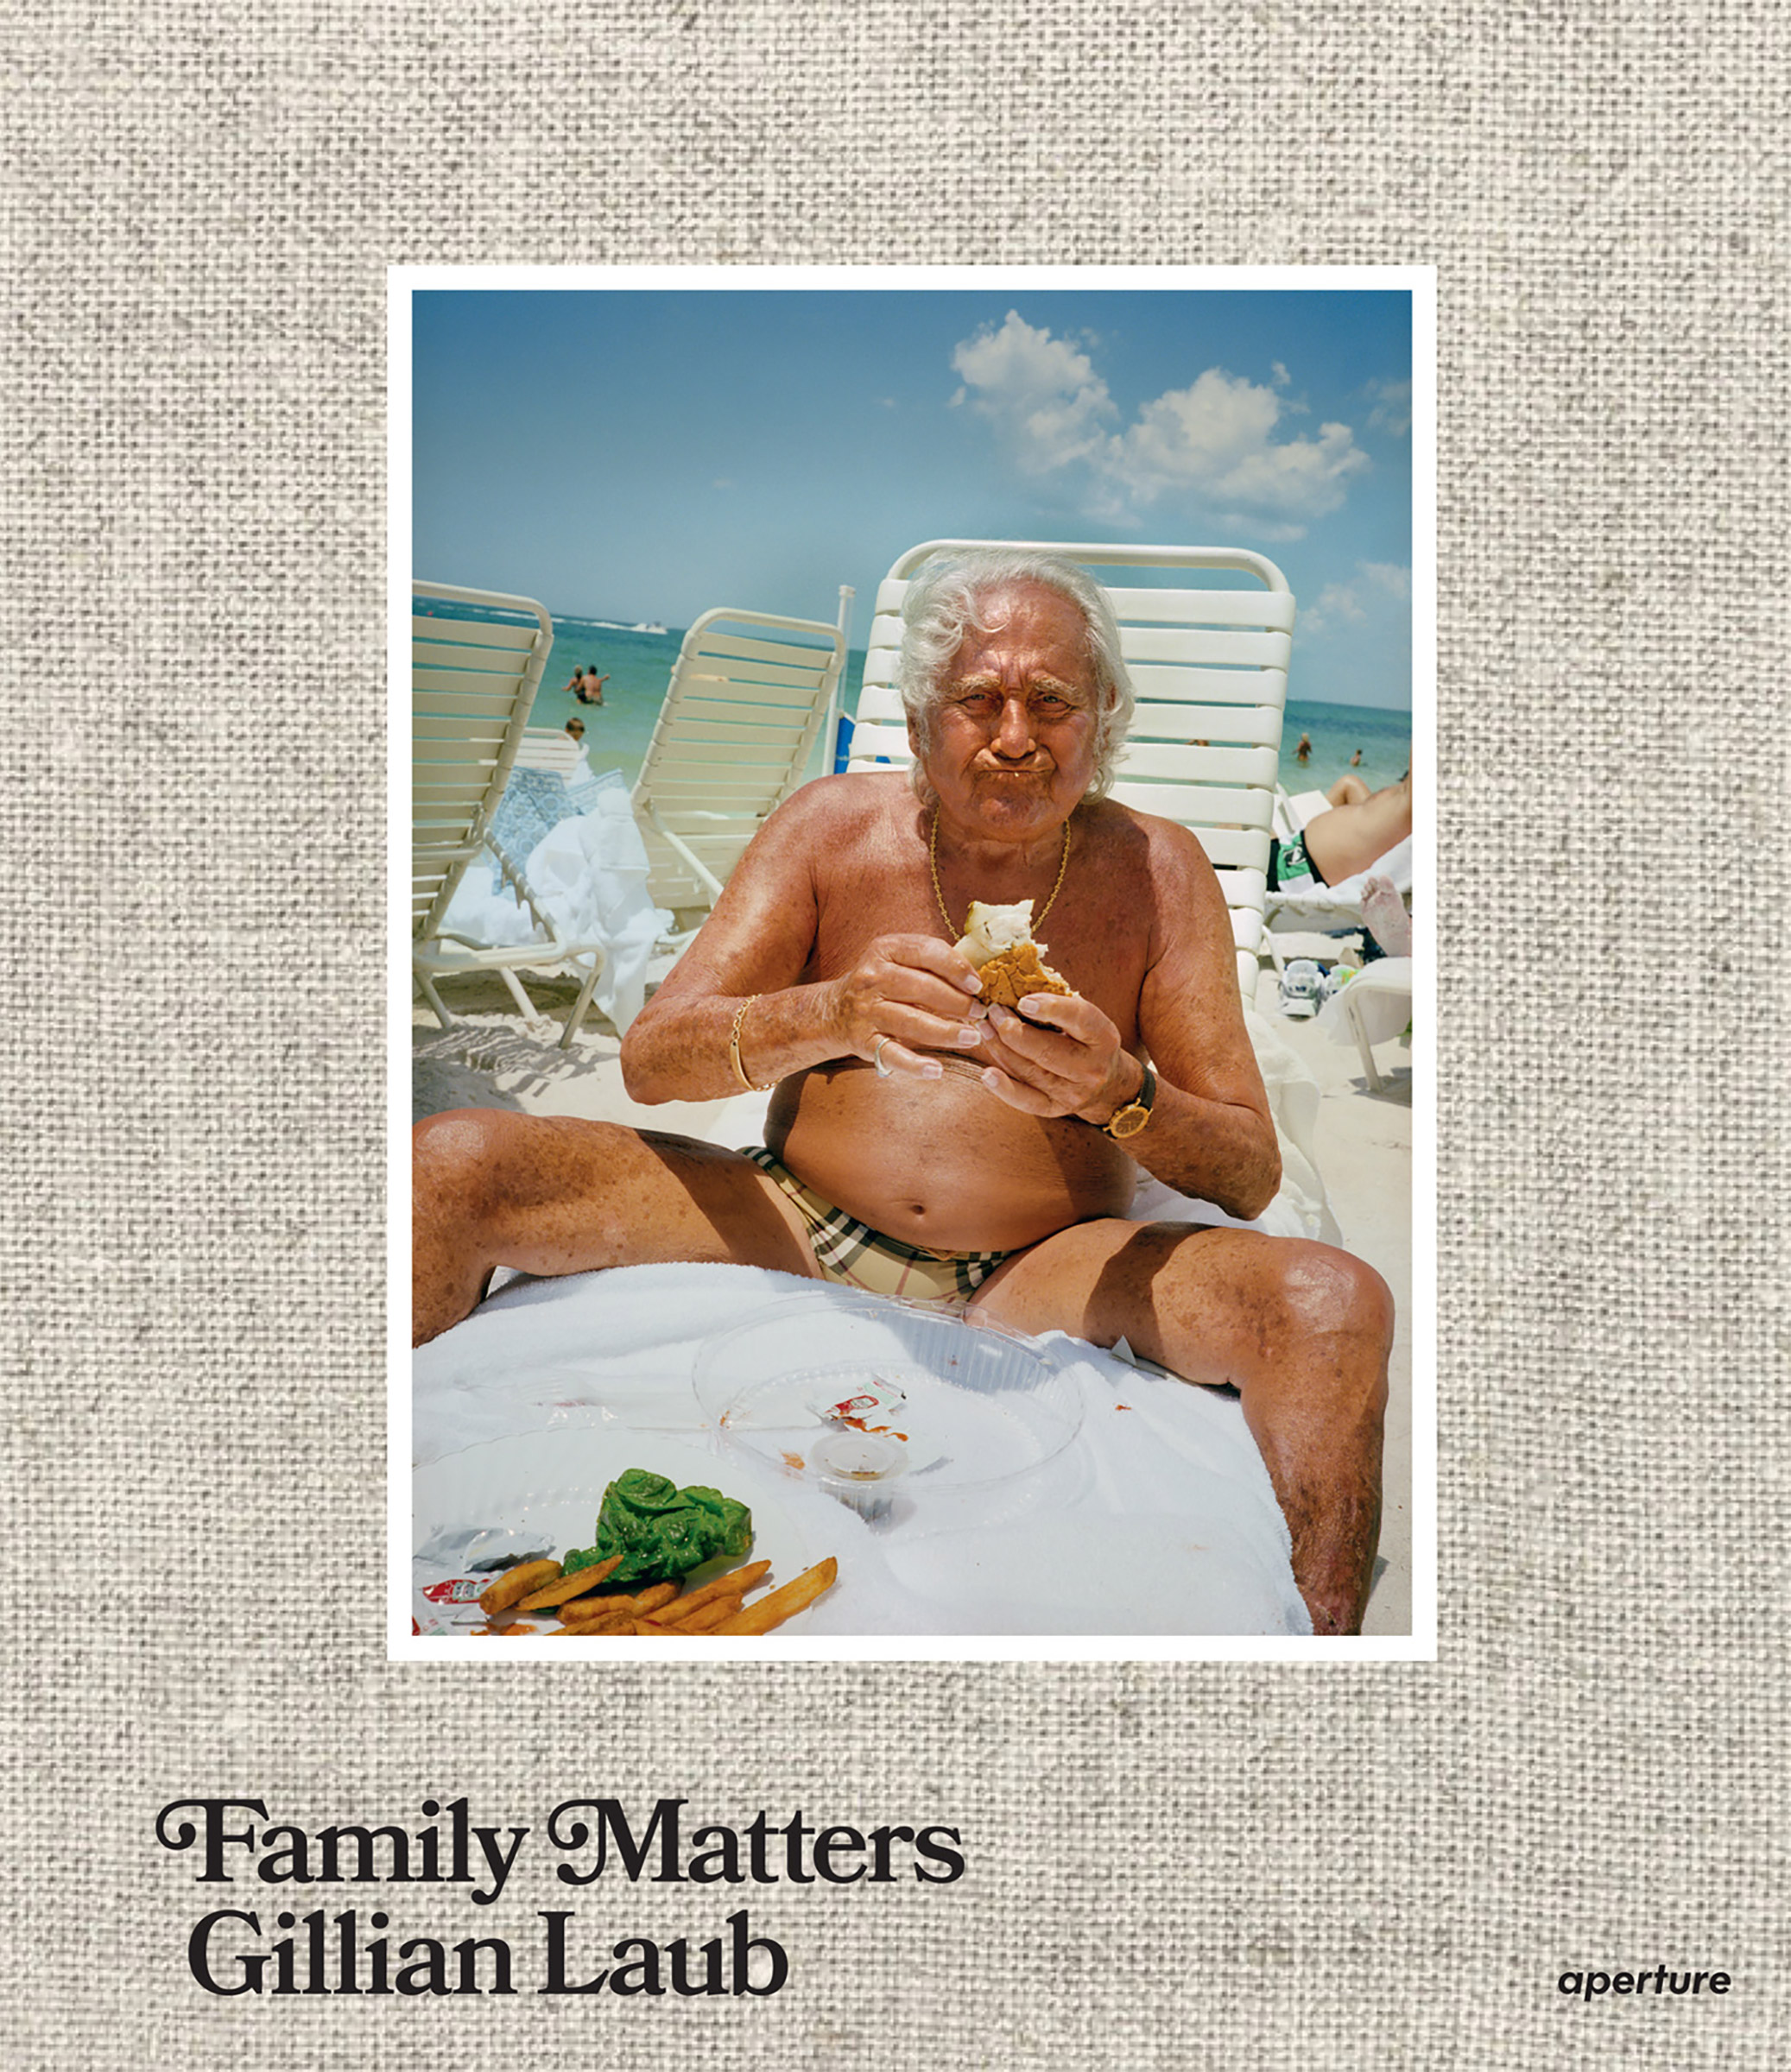 Family Matters by Gillian Laub (Aperture)